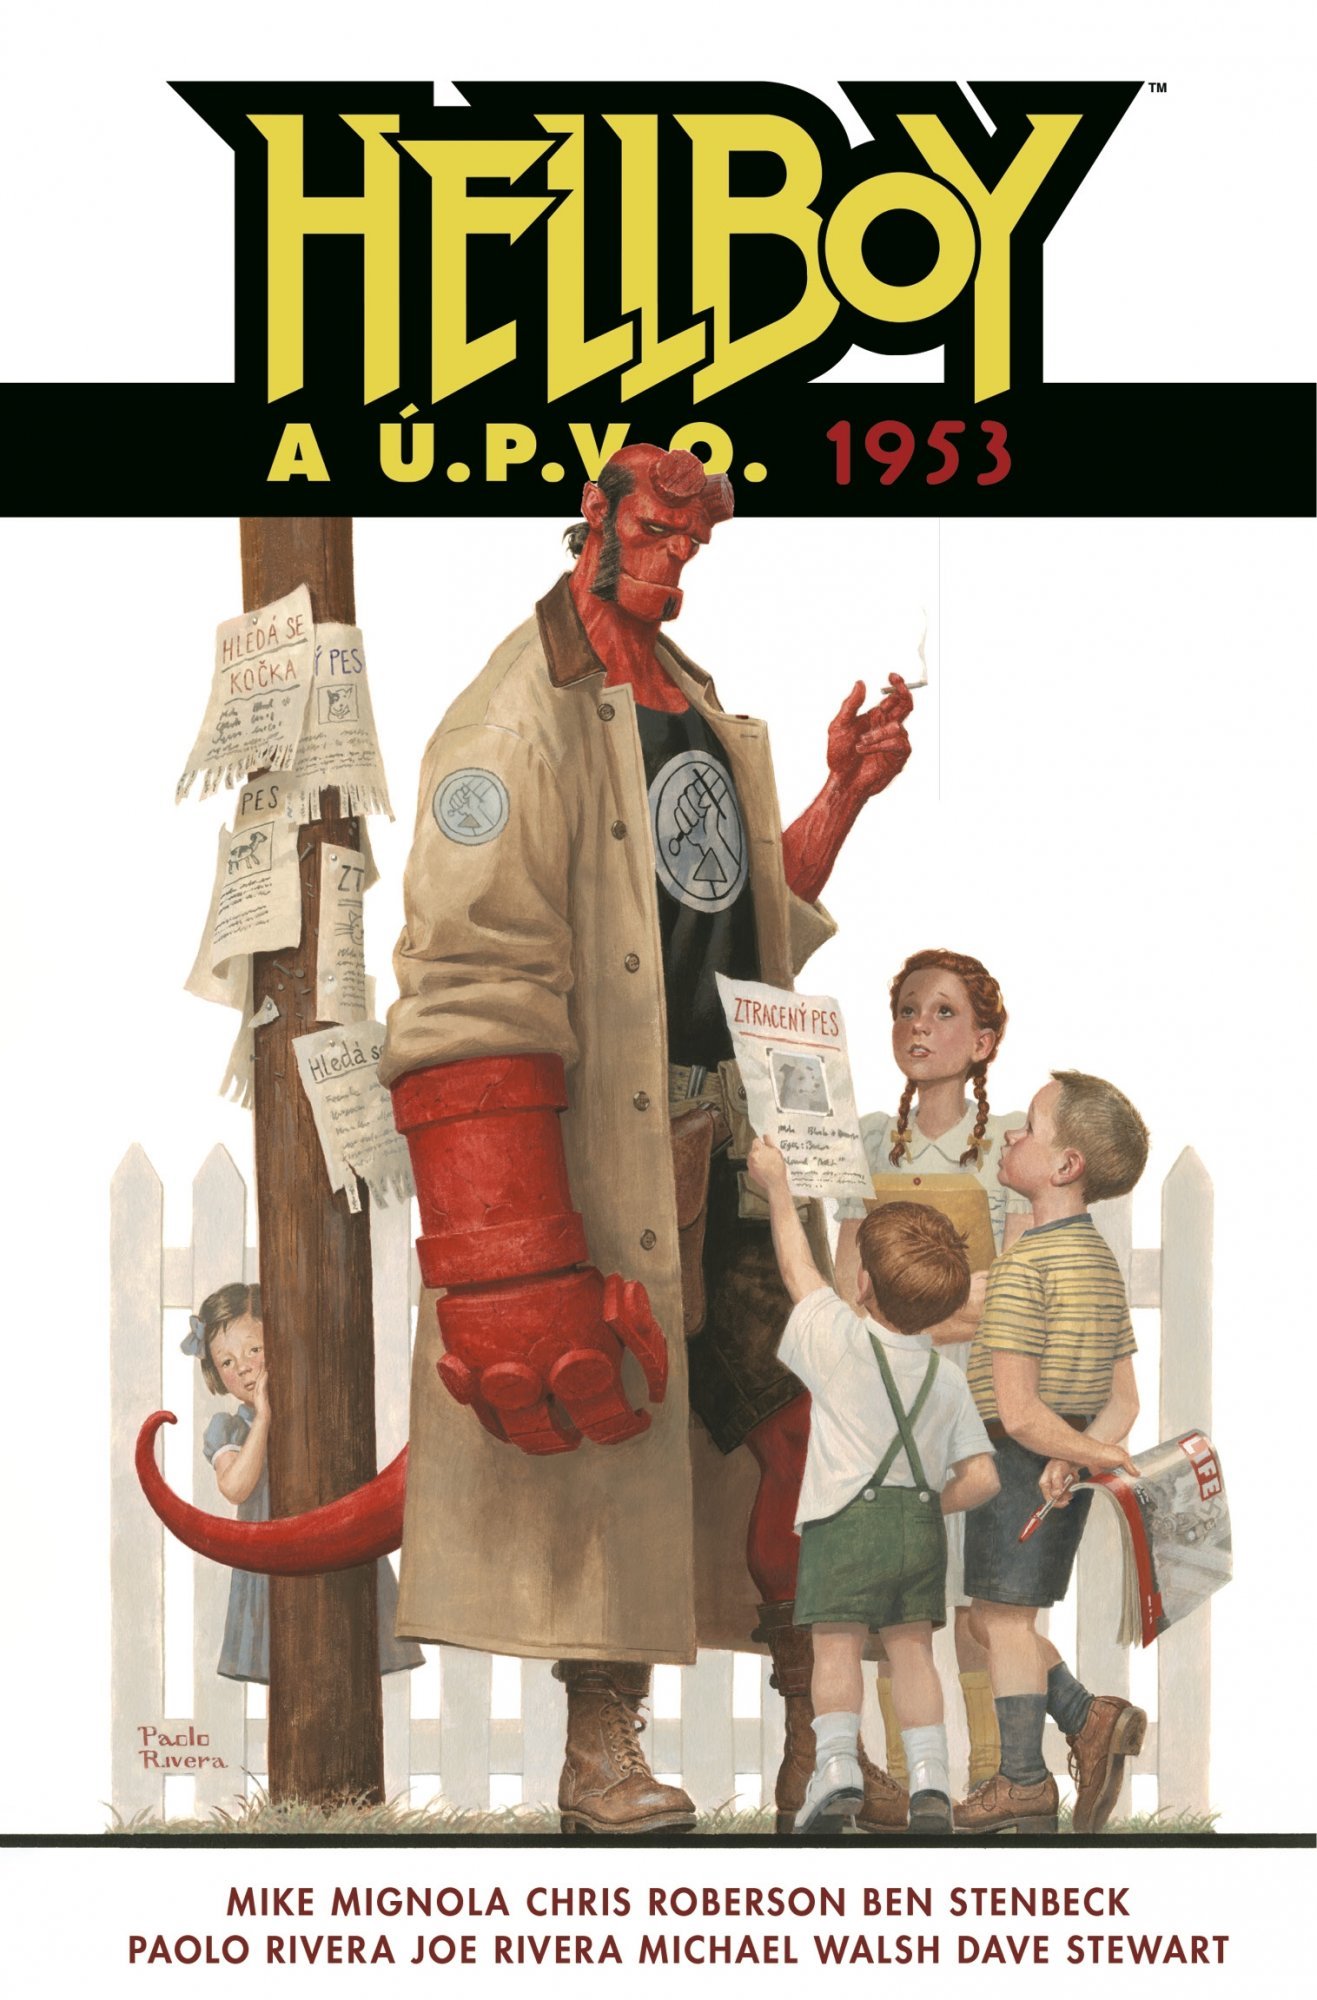 Hellboy a Ú.P.V.O. 2 - 1953 - Mike Mignola